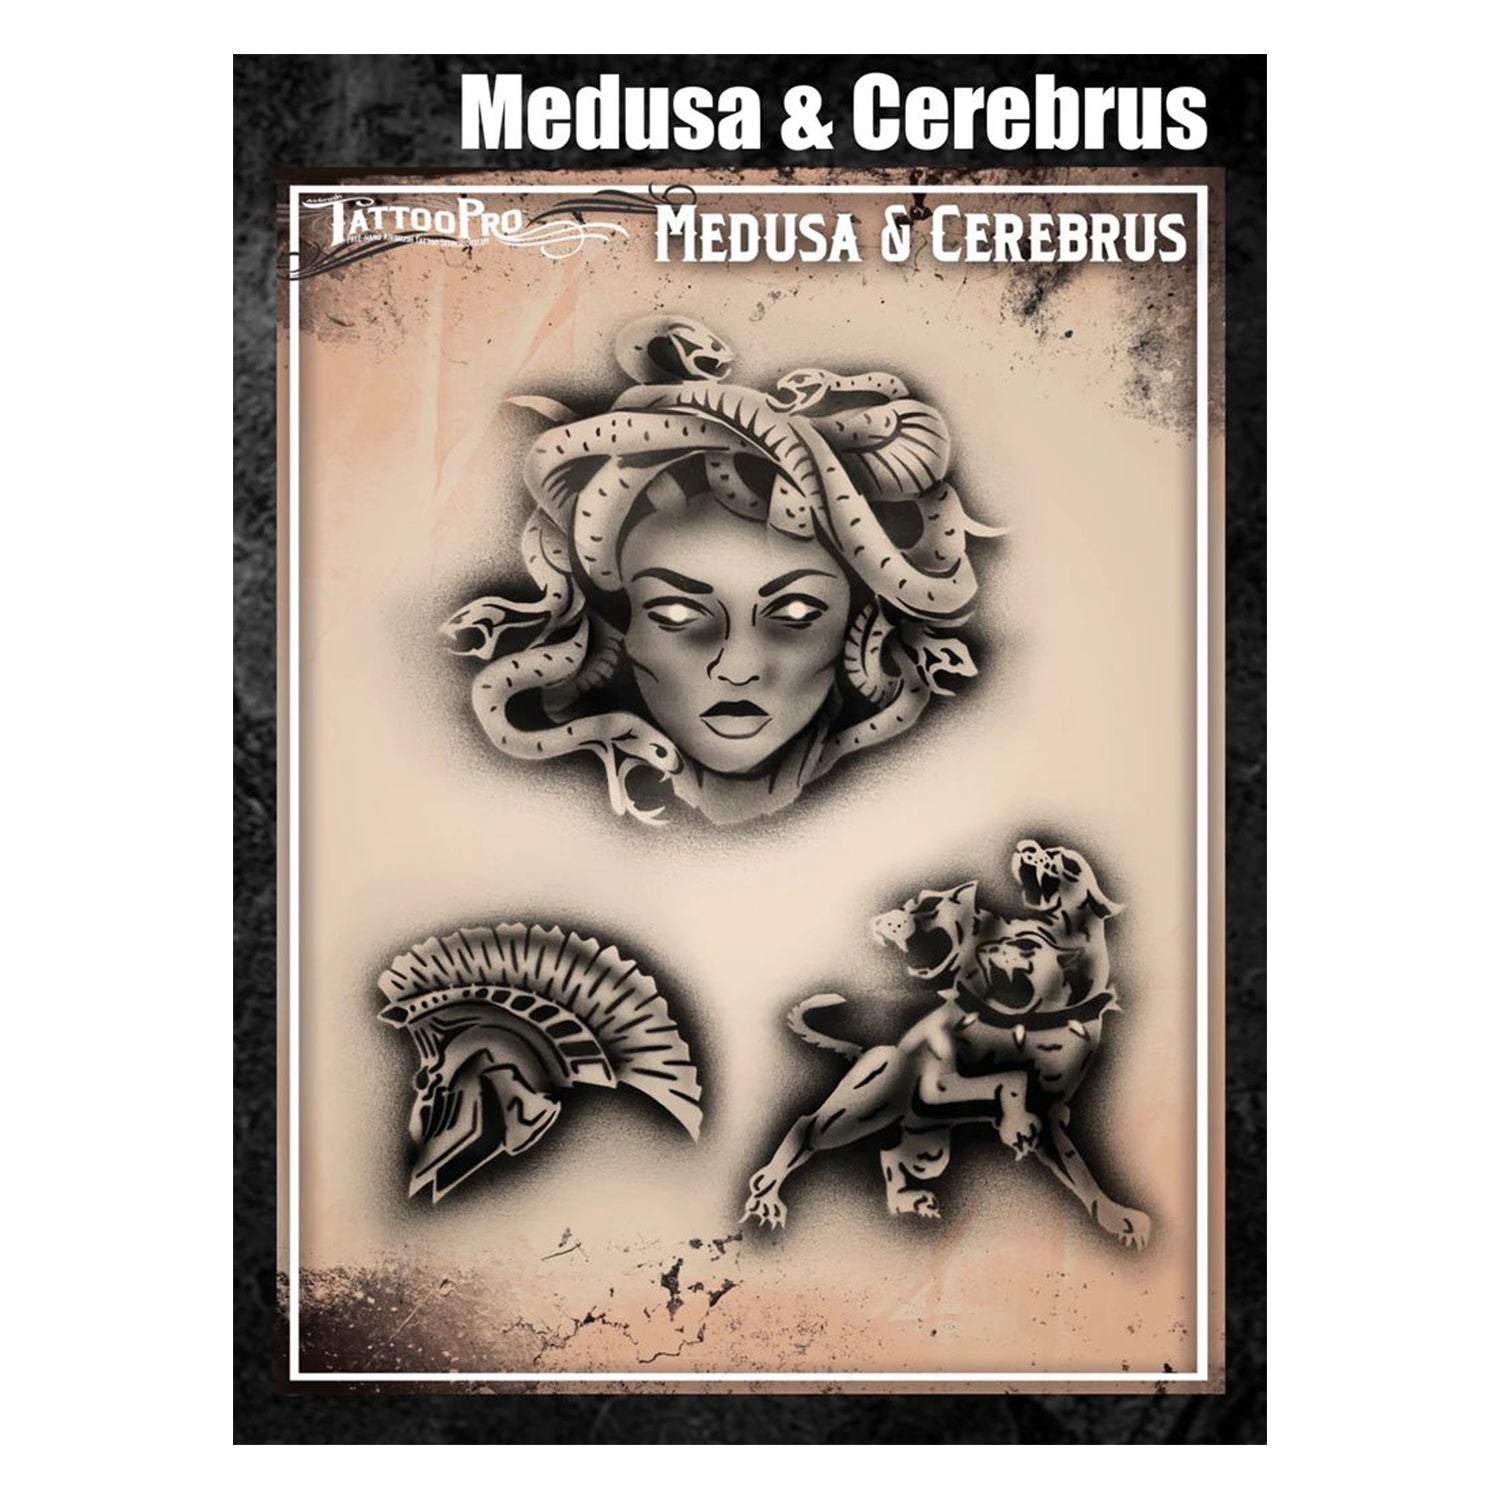 Tattoo Pro Stencils - Medusa & Cerebrus